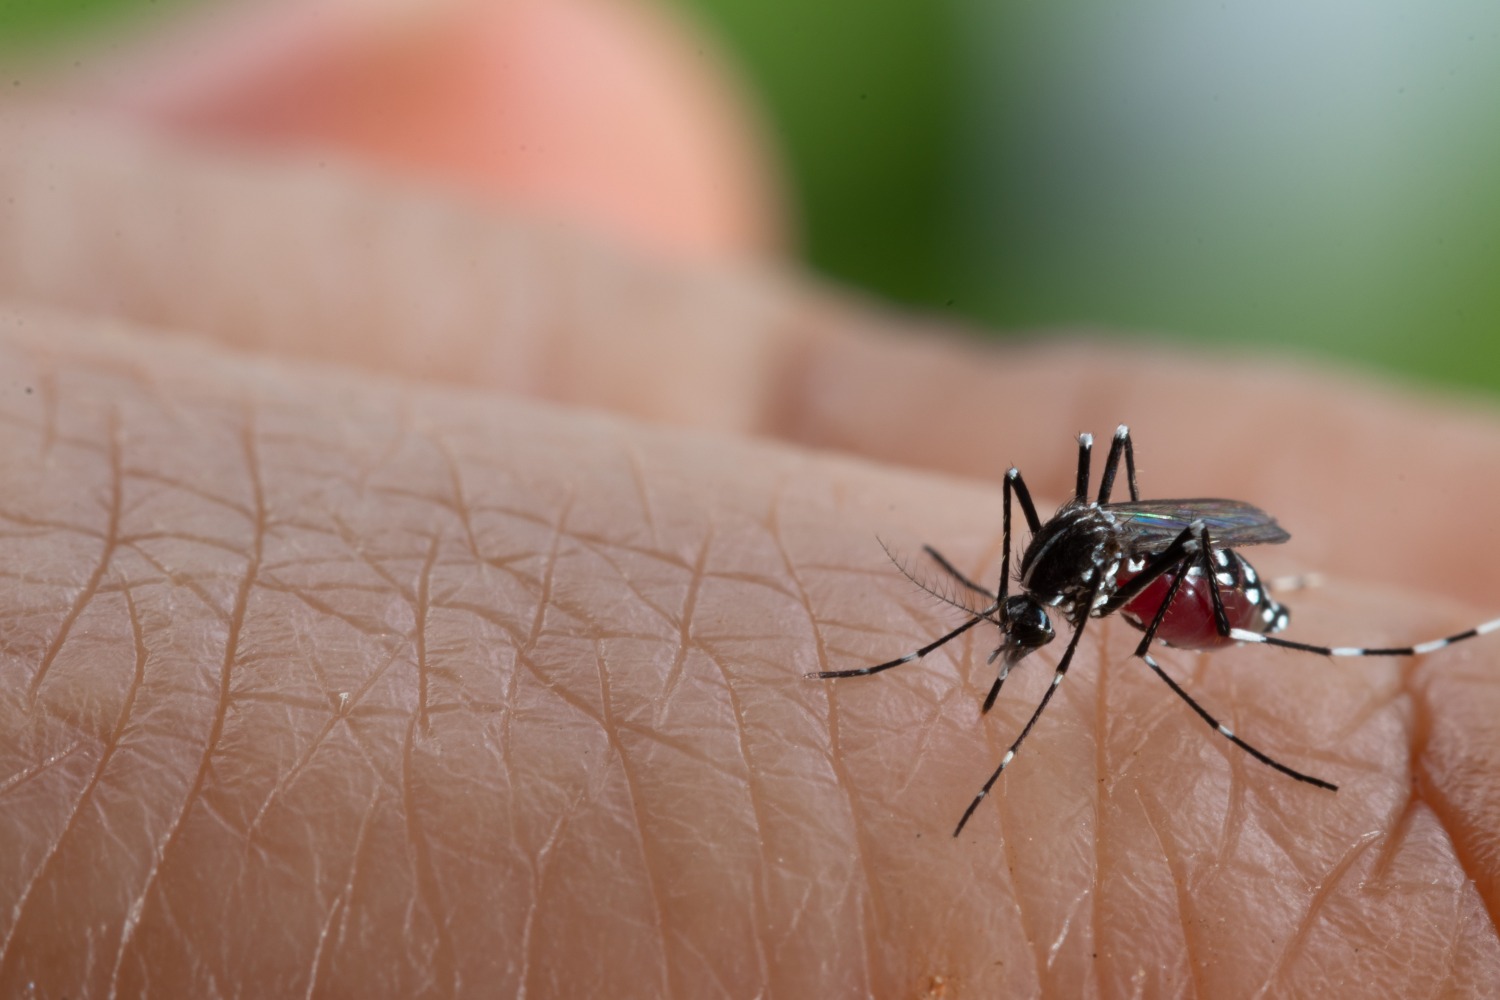 Epidemia de Dengue: teste rápido auxilia controle da doença